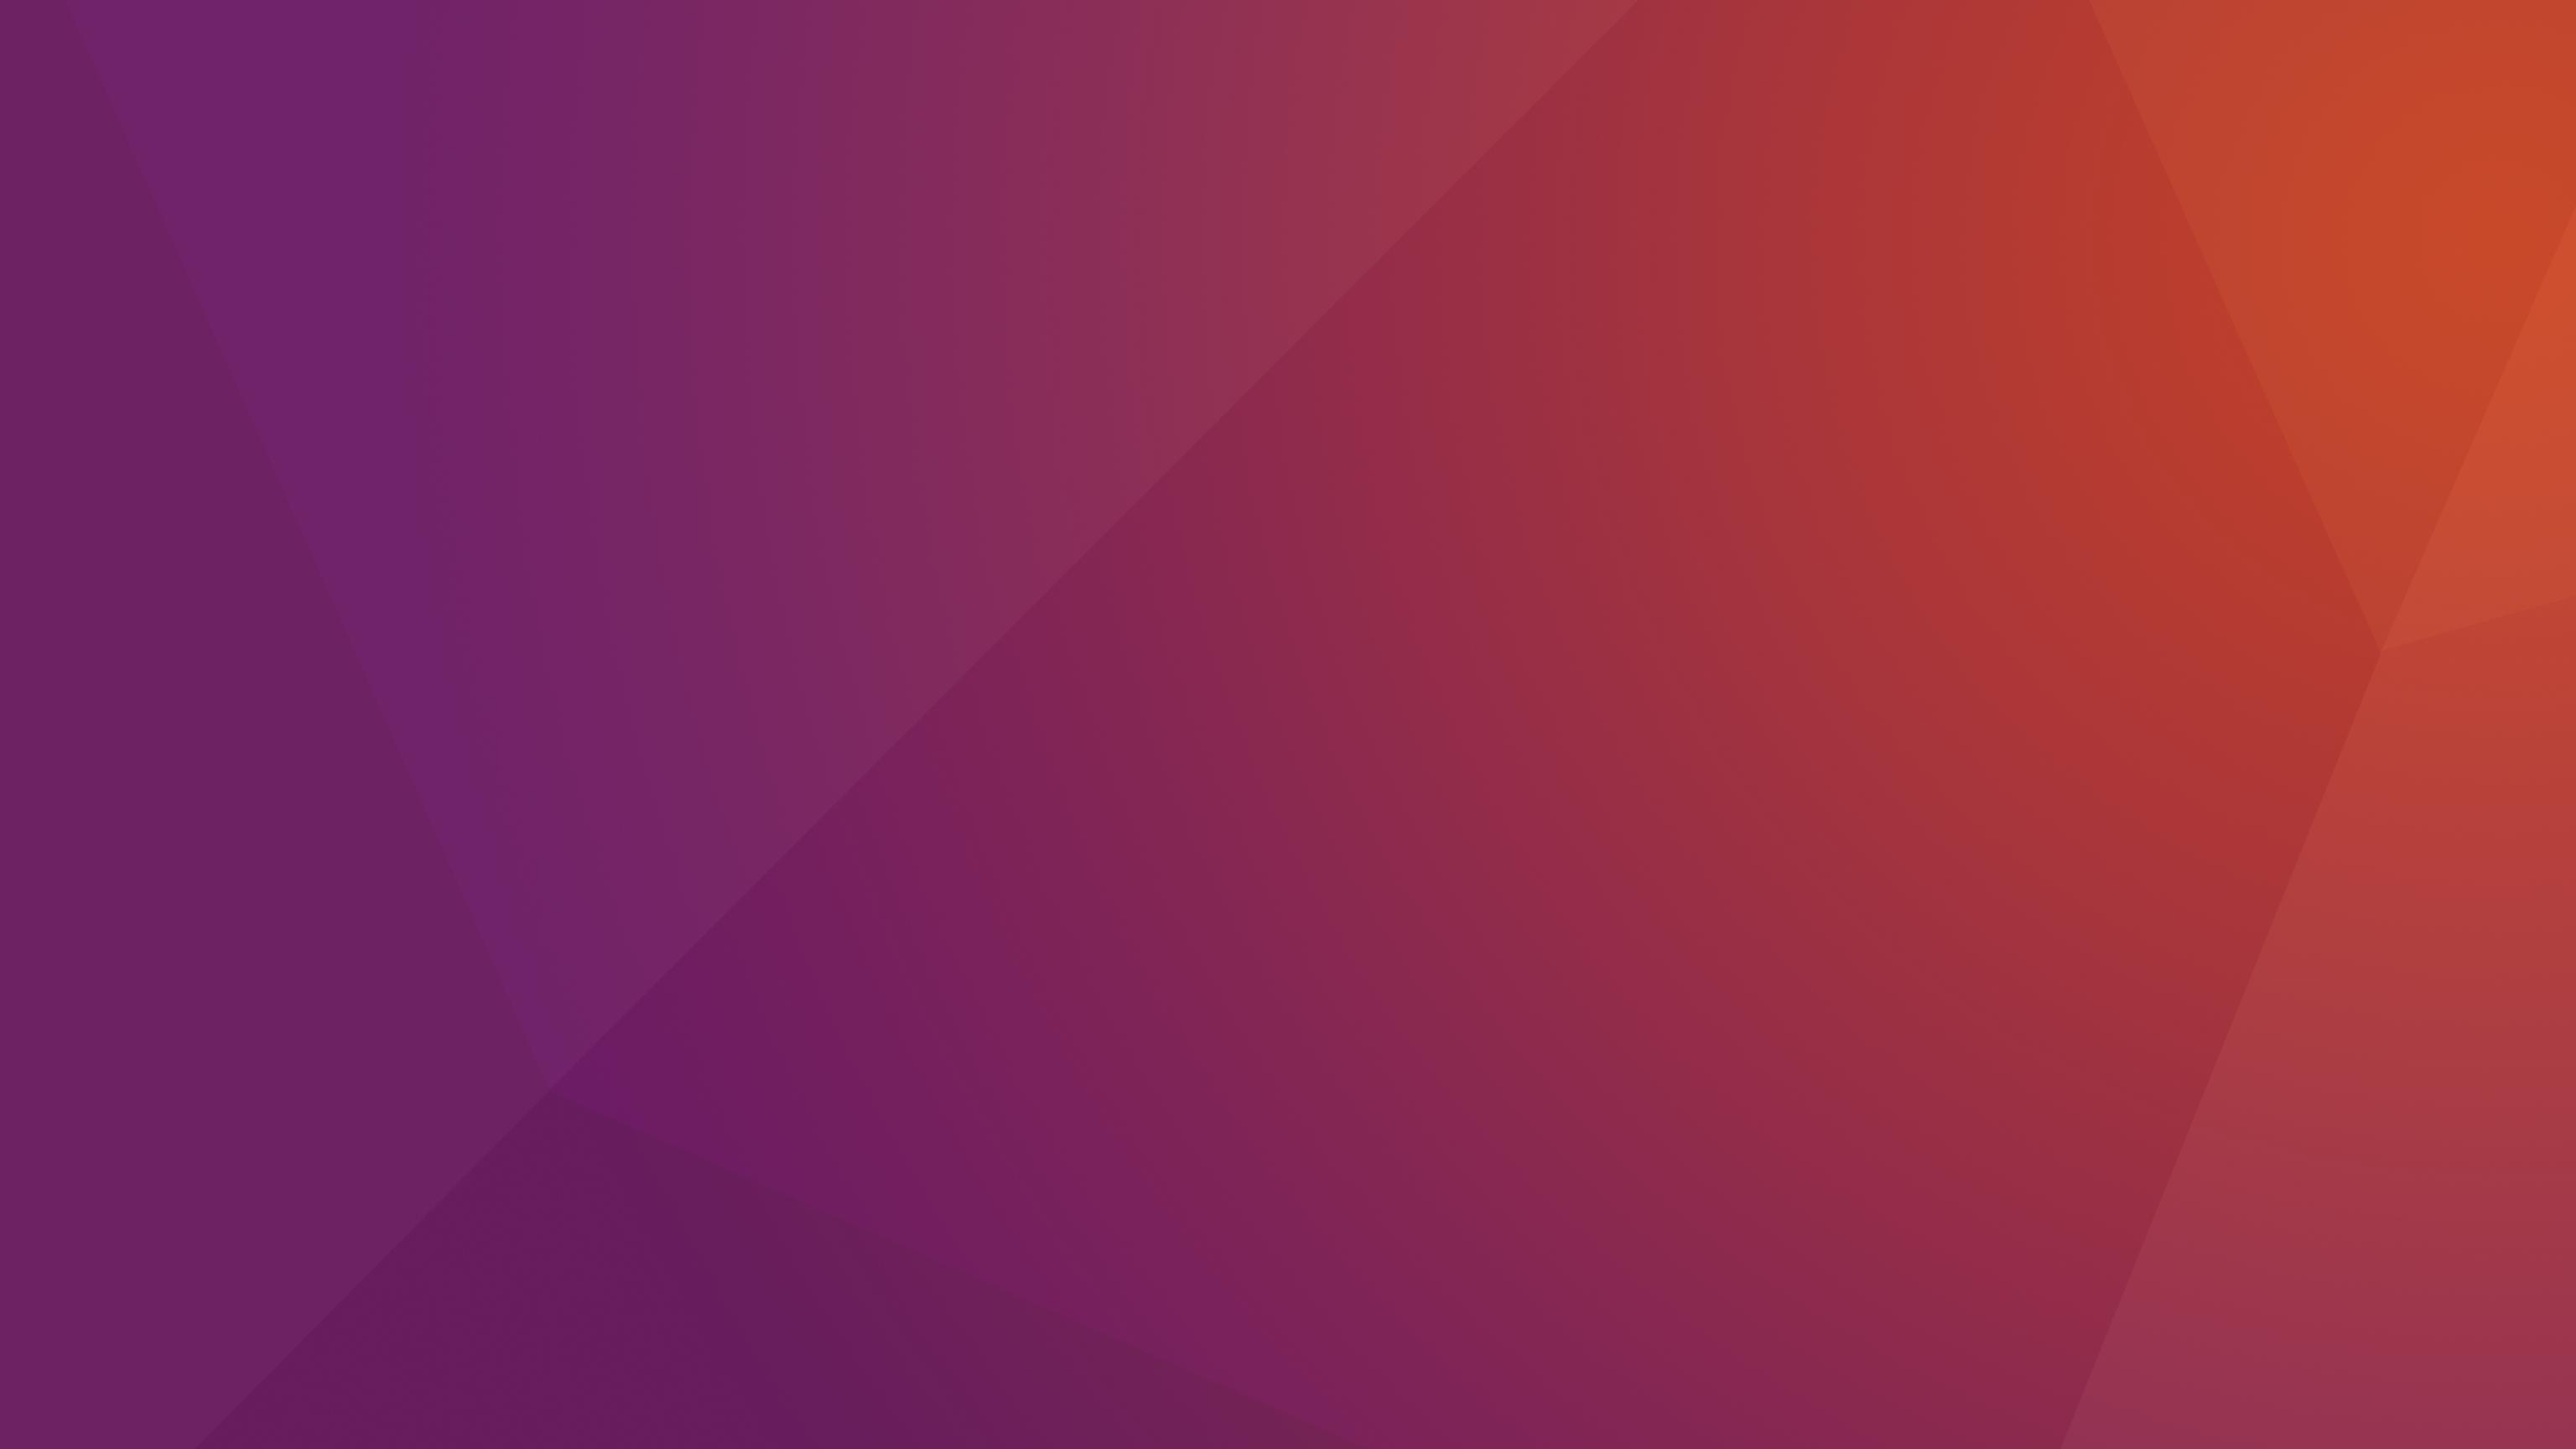 3072x1728 Where to find default Ubuntu purple wallpaper without animals? Ask Ubuntu